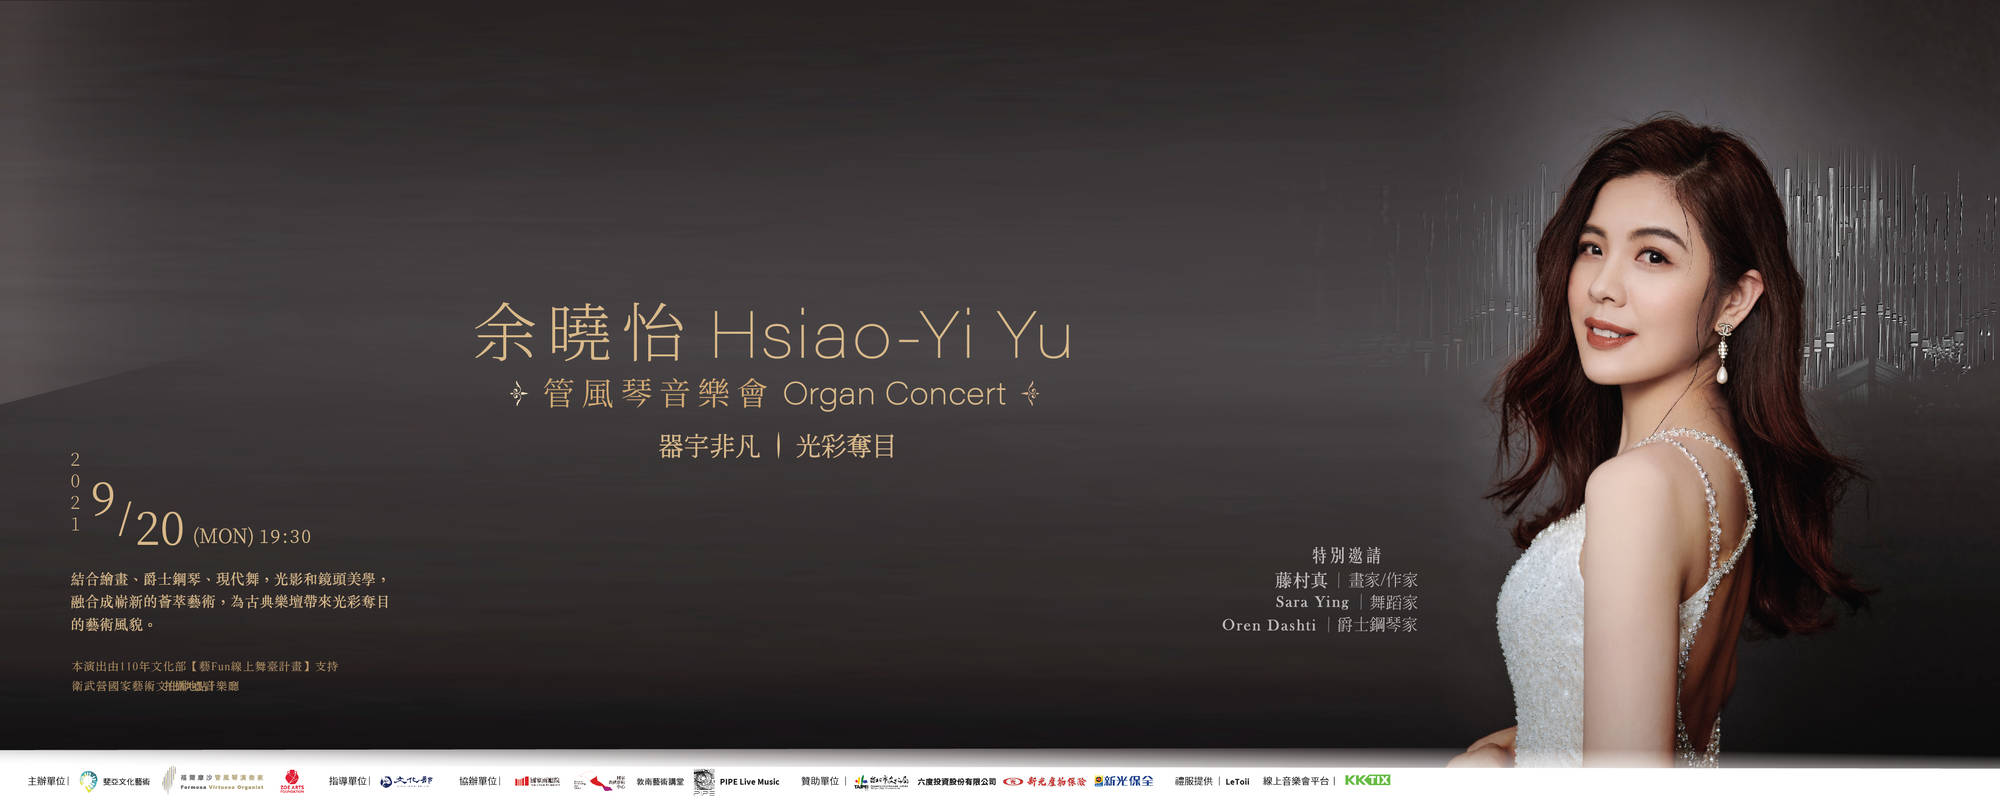 YU Hsaio-yi Organ Concert